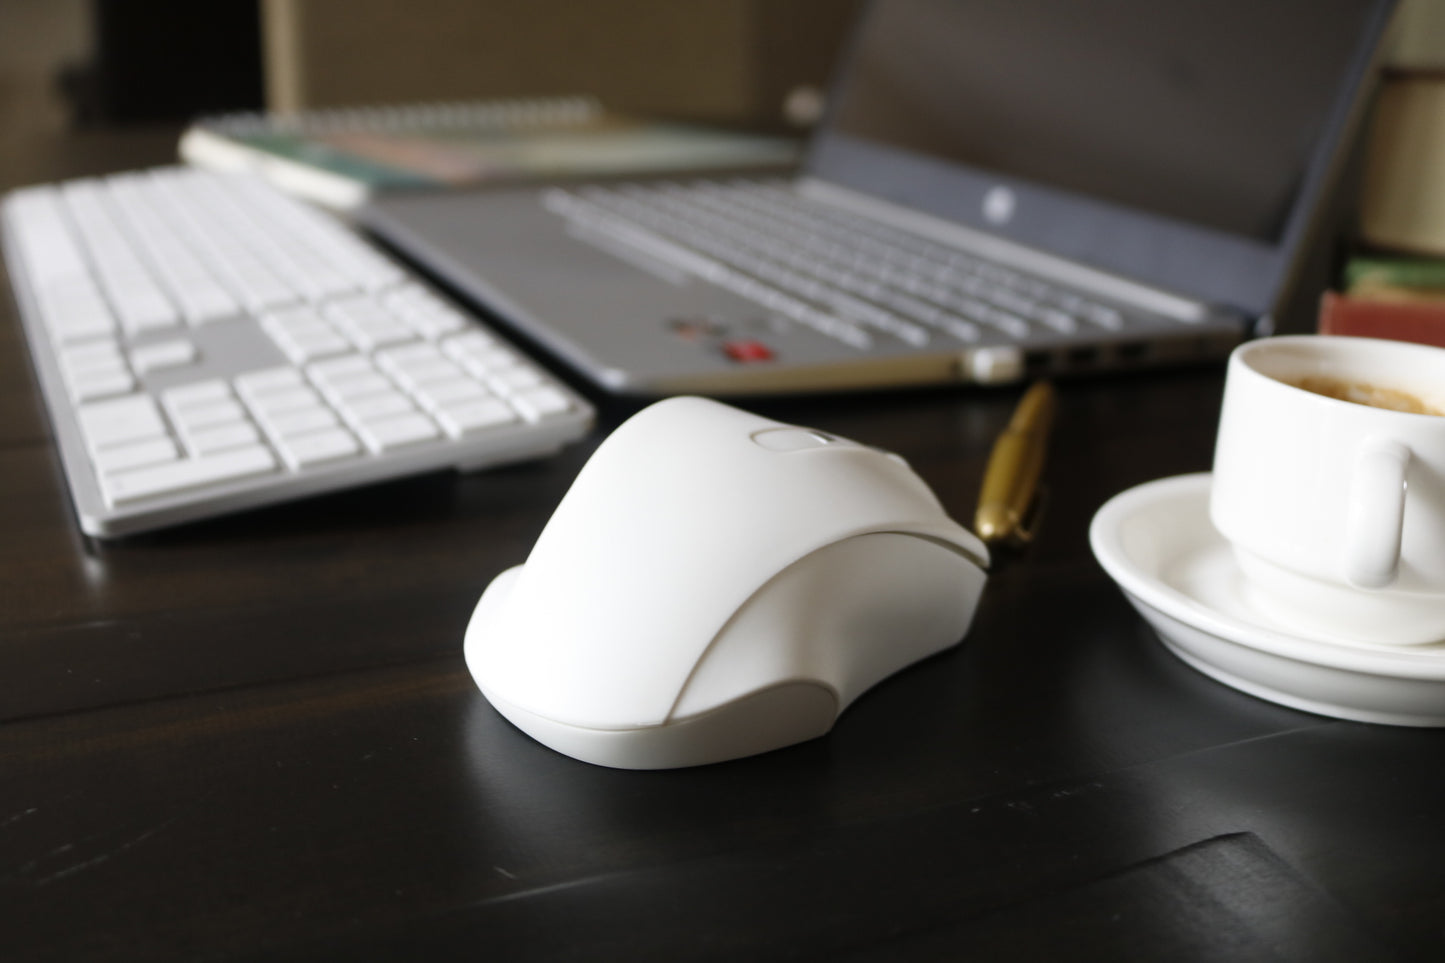 Wireless USB-C Pro Mouse – White